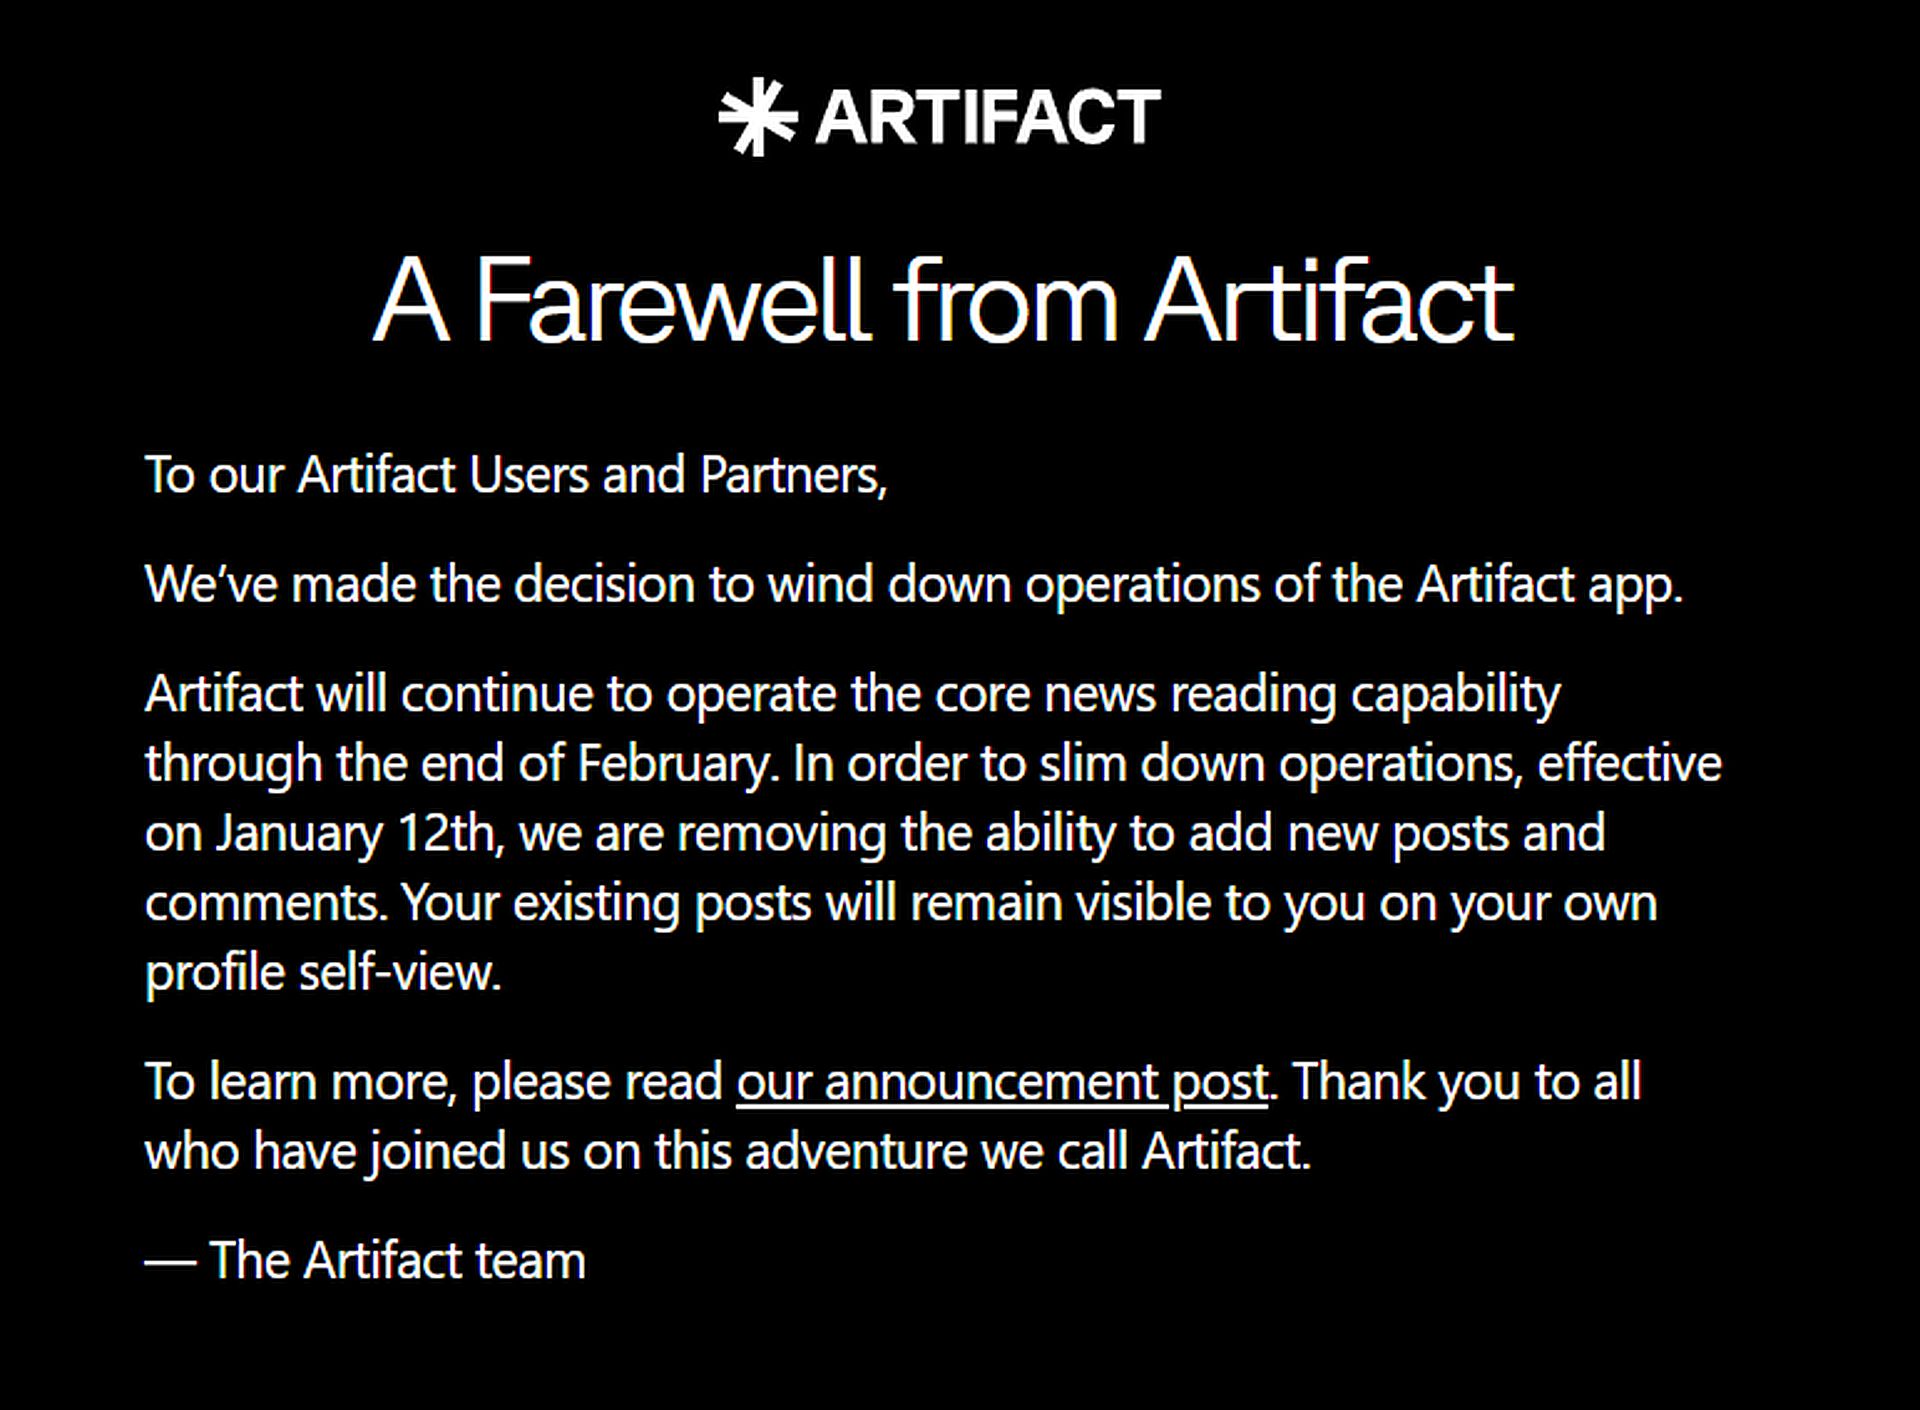 Why is Artifact shutting down?